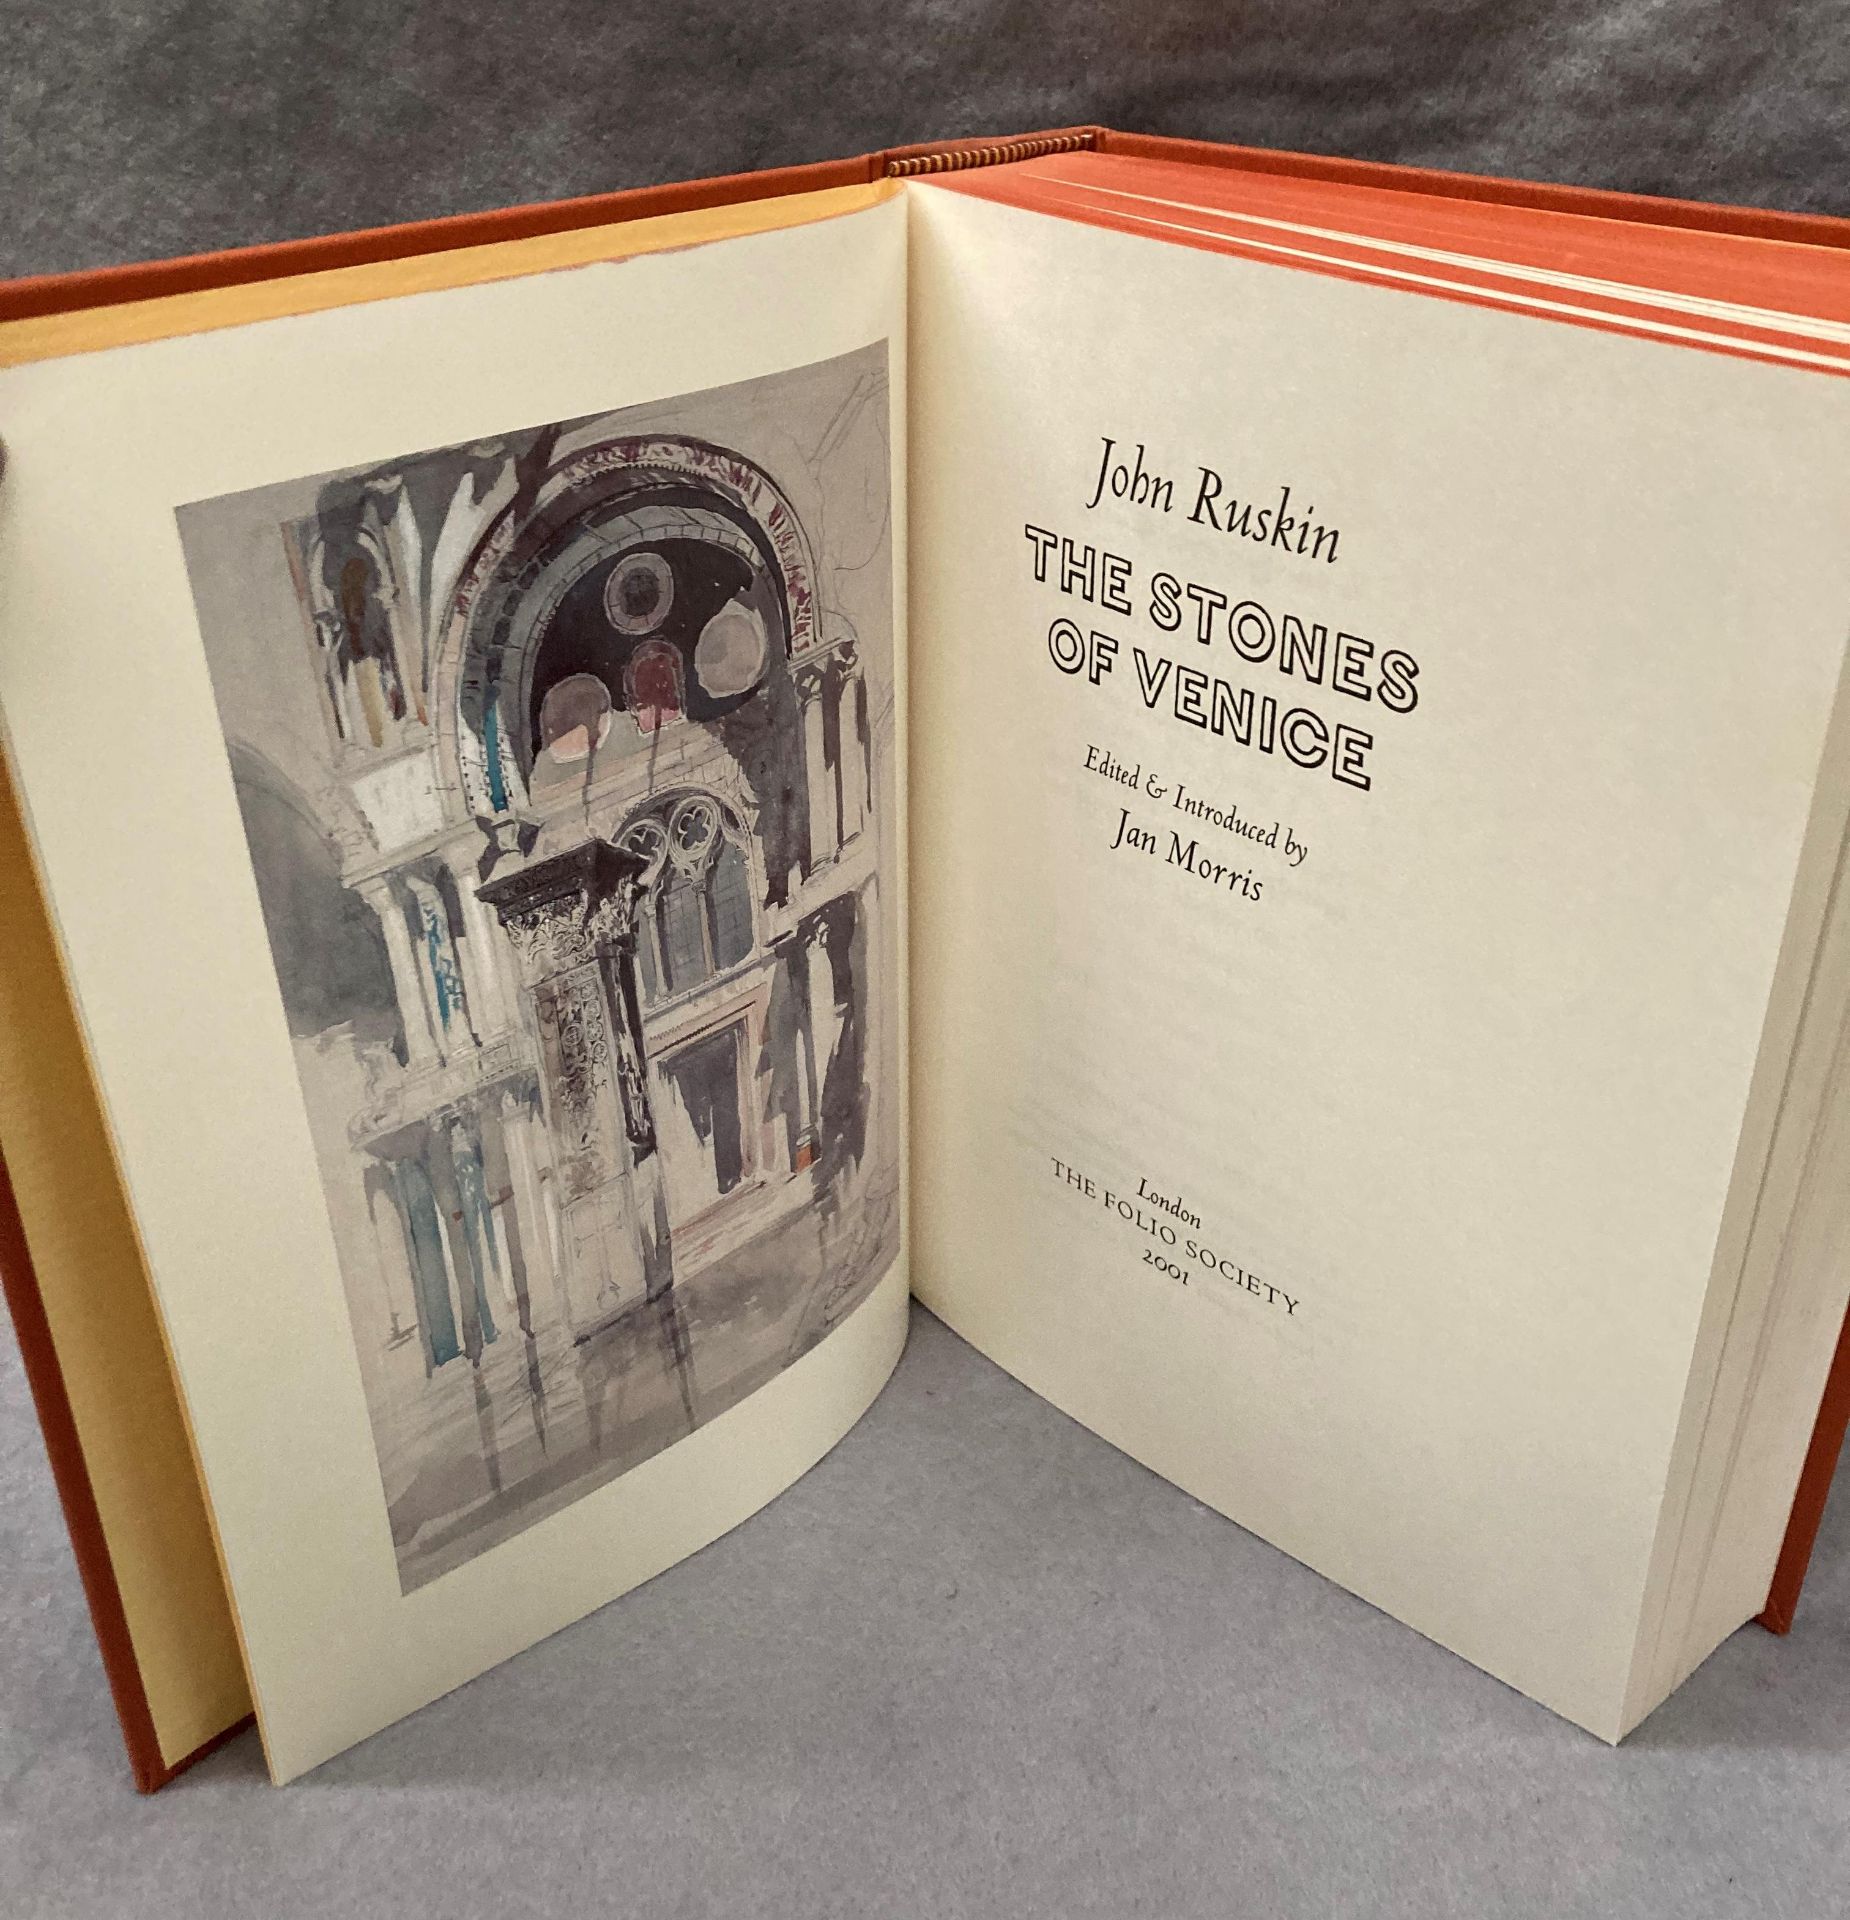 Four Folio Society books by John Ruskin 'The Stones of Venice' 2001, - Image 4 of 5